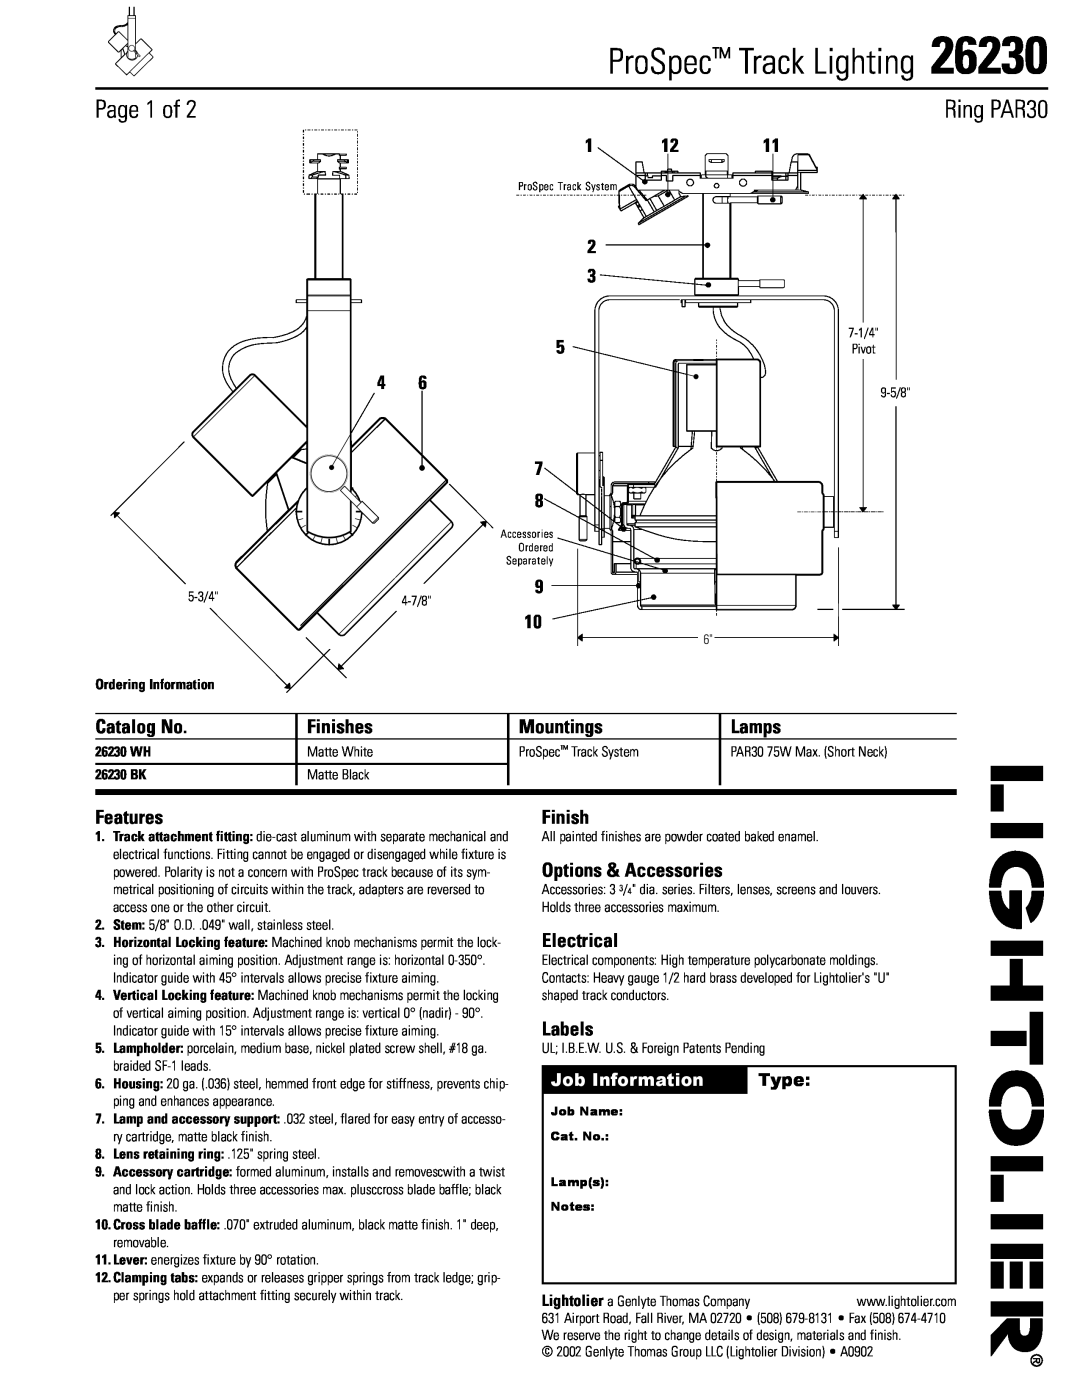 Lightolier manual Page 1 of, Job Information, Type, Ordering Information, 26230 WH, 26230 BK, ProSpec Track Lighting 